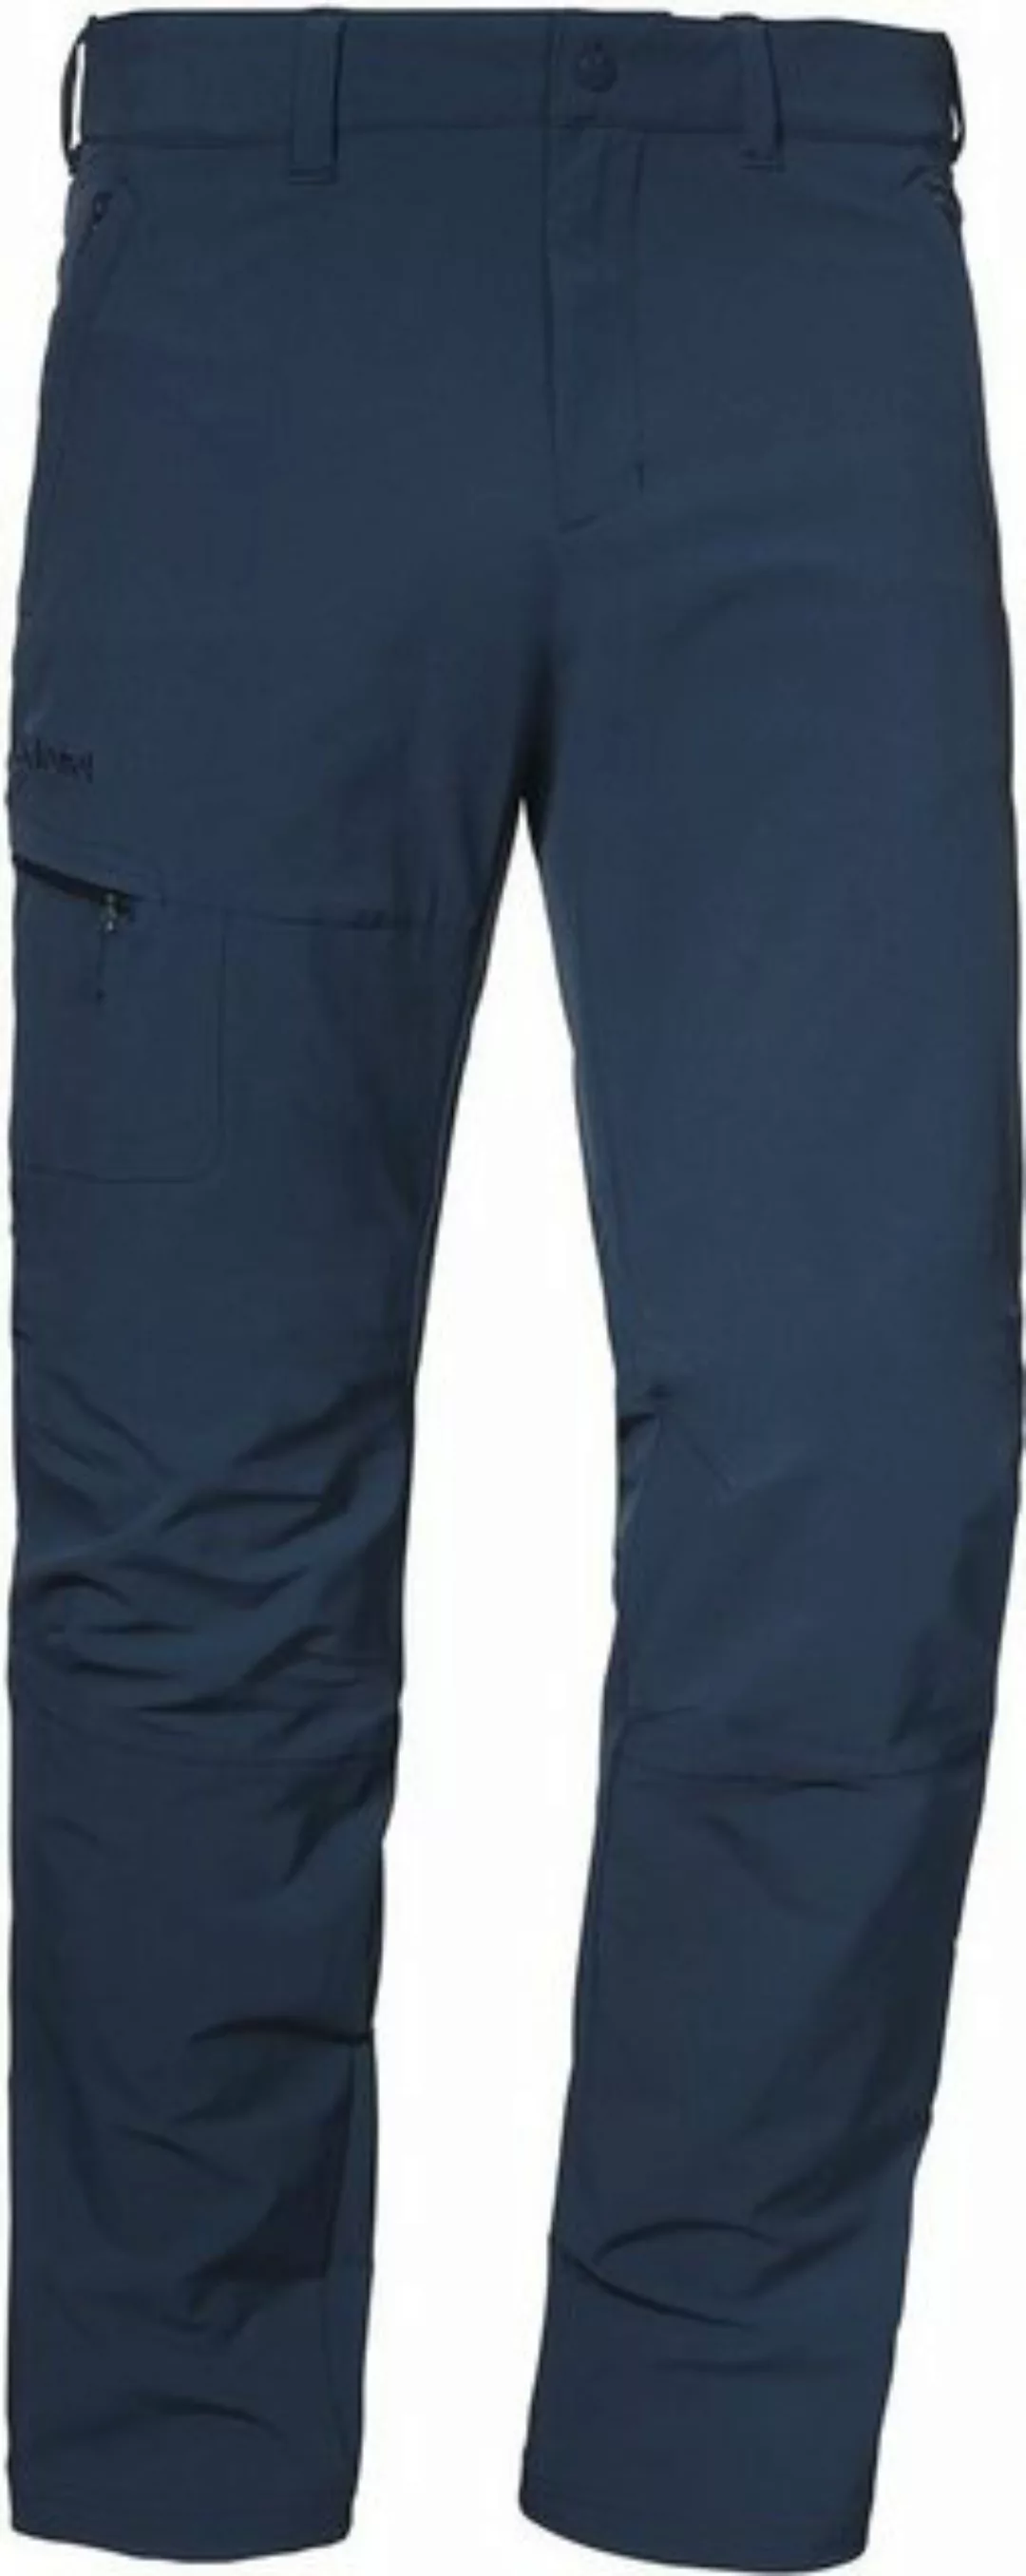 Schöffel Trekkinghose Pants Koper1 8180 dress blues günstig online kaufen